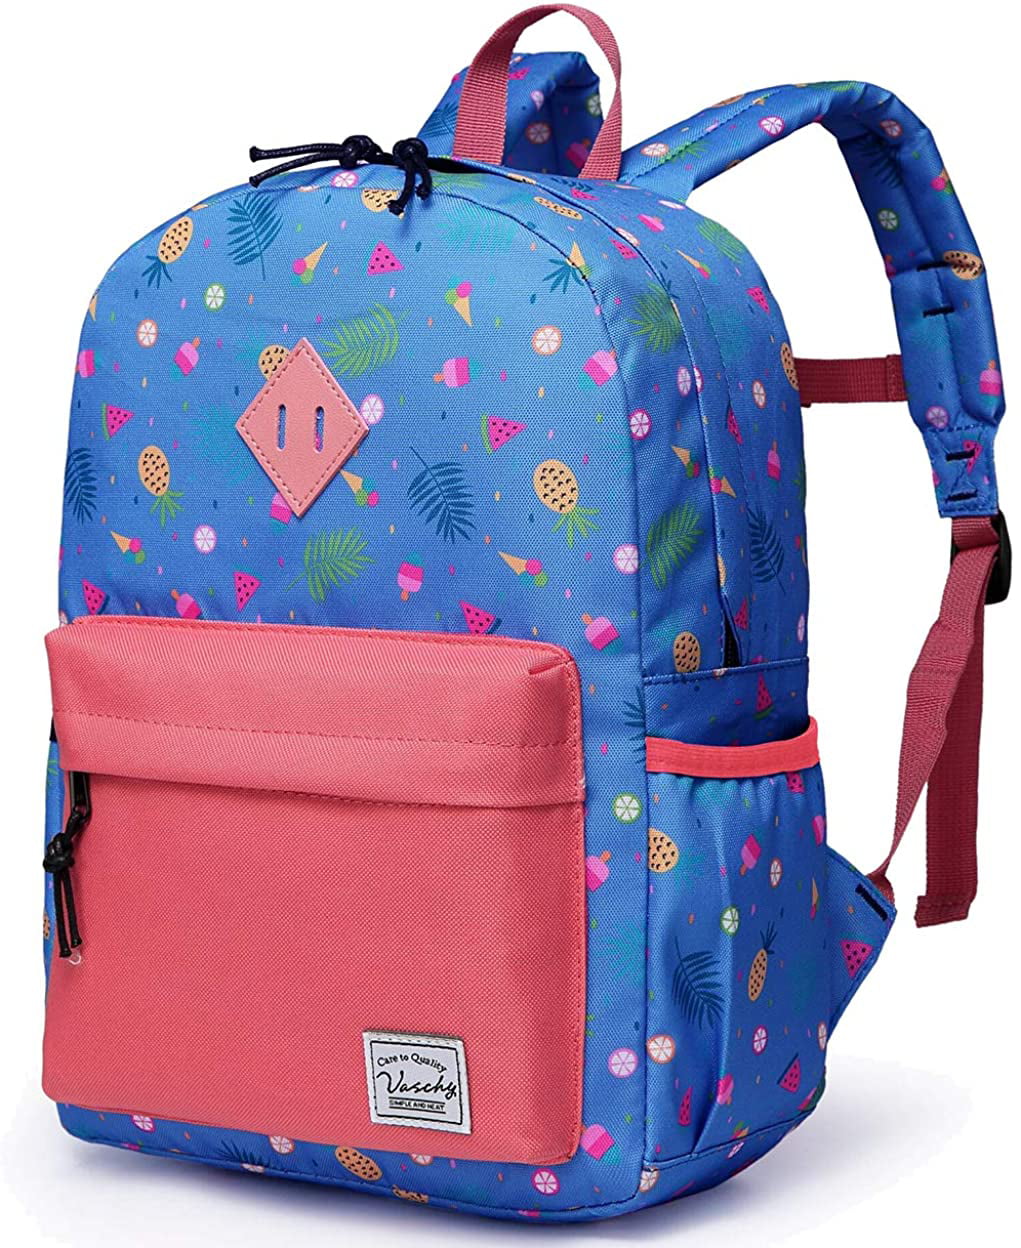 Preschool Backpack,Vaschy Little Kid Backpacks for Boys and Girls with ...